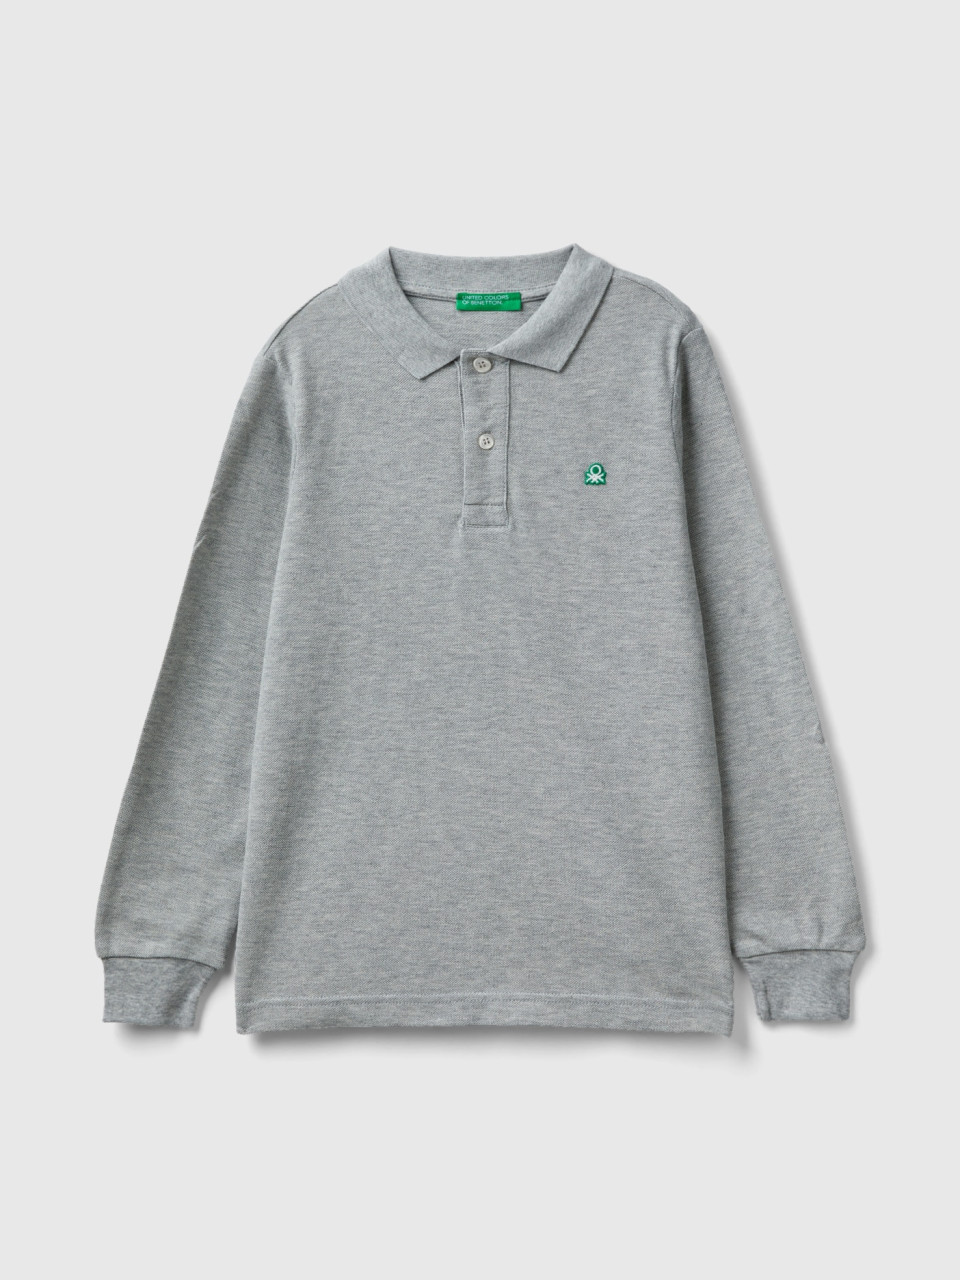 Benetton, 100% Organic Cotton Long Sleeve Polo, Light Gray, Kids